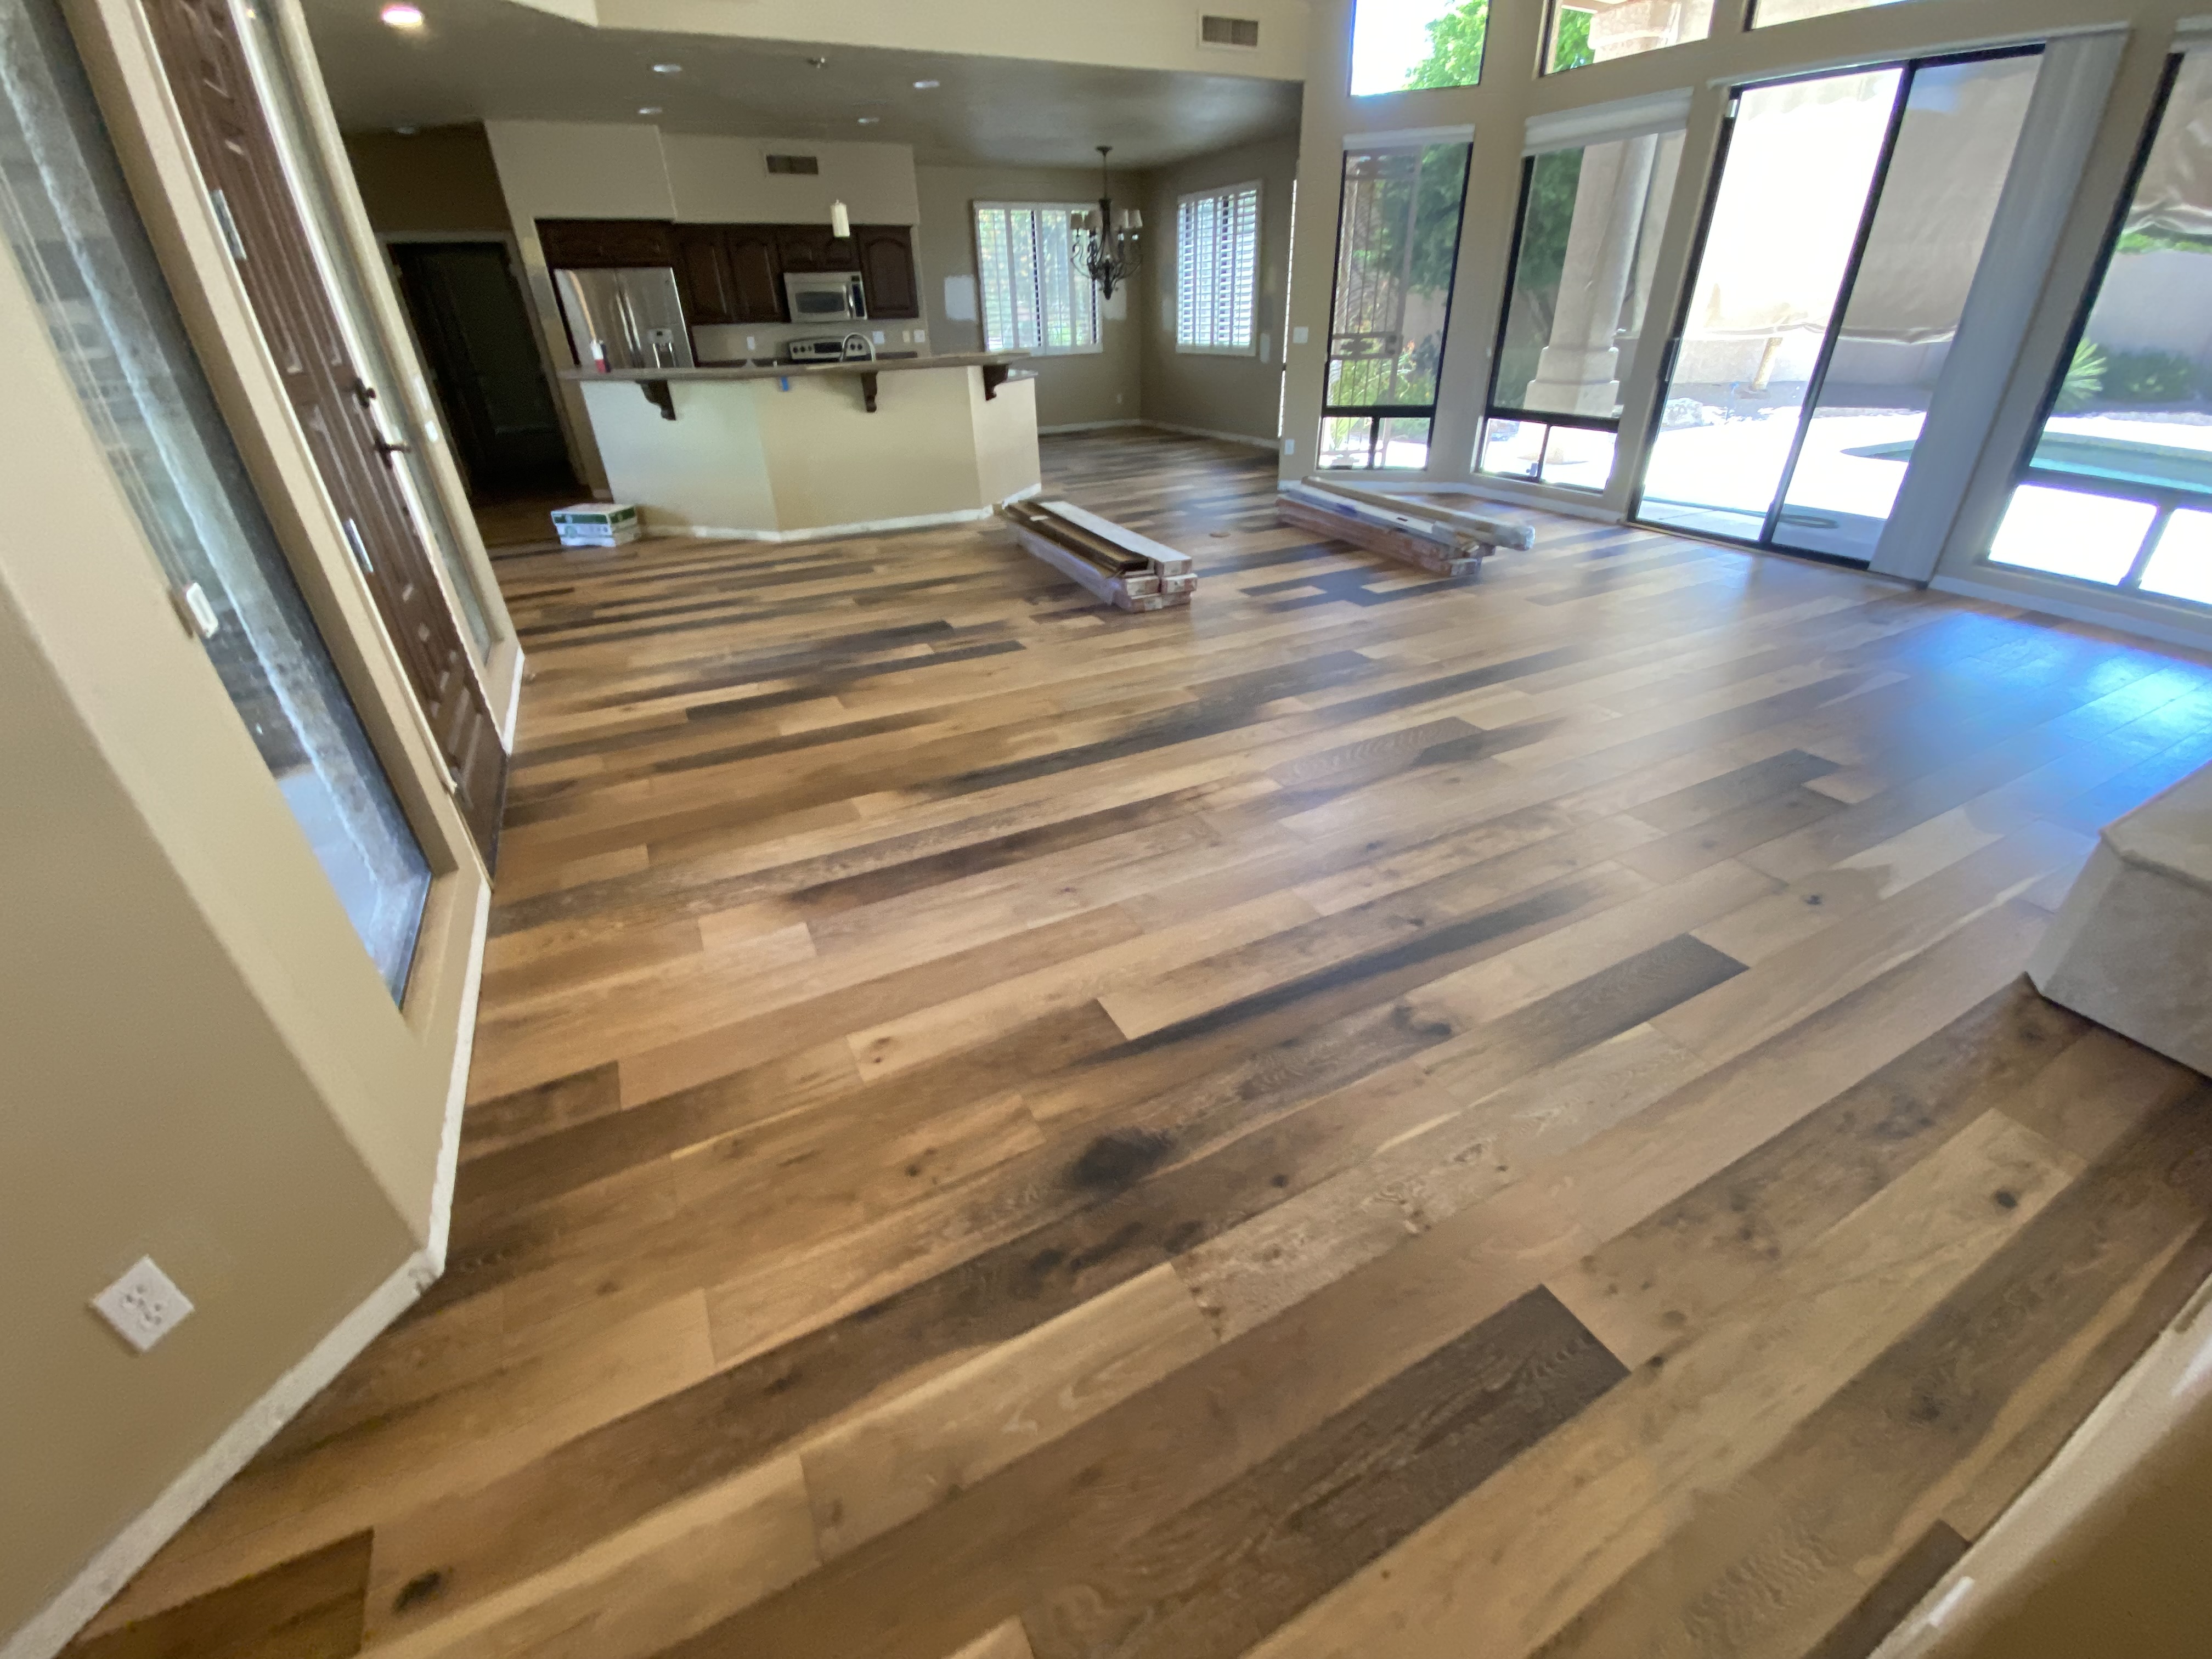 Hardwood Flooring Image